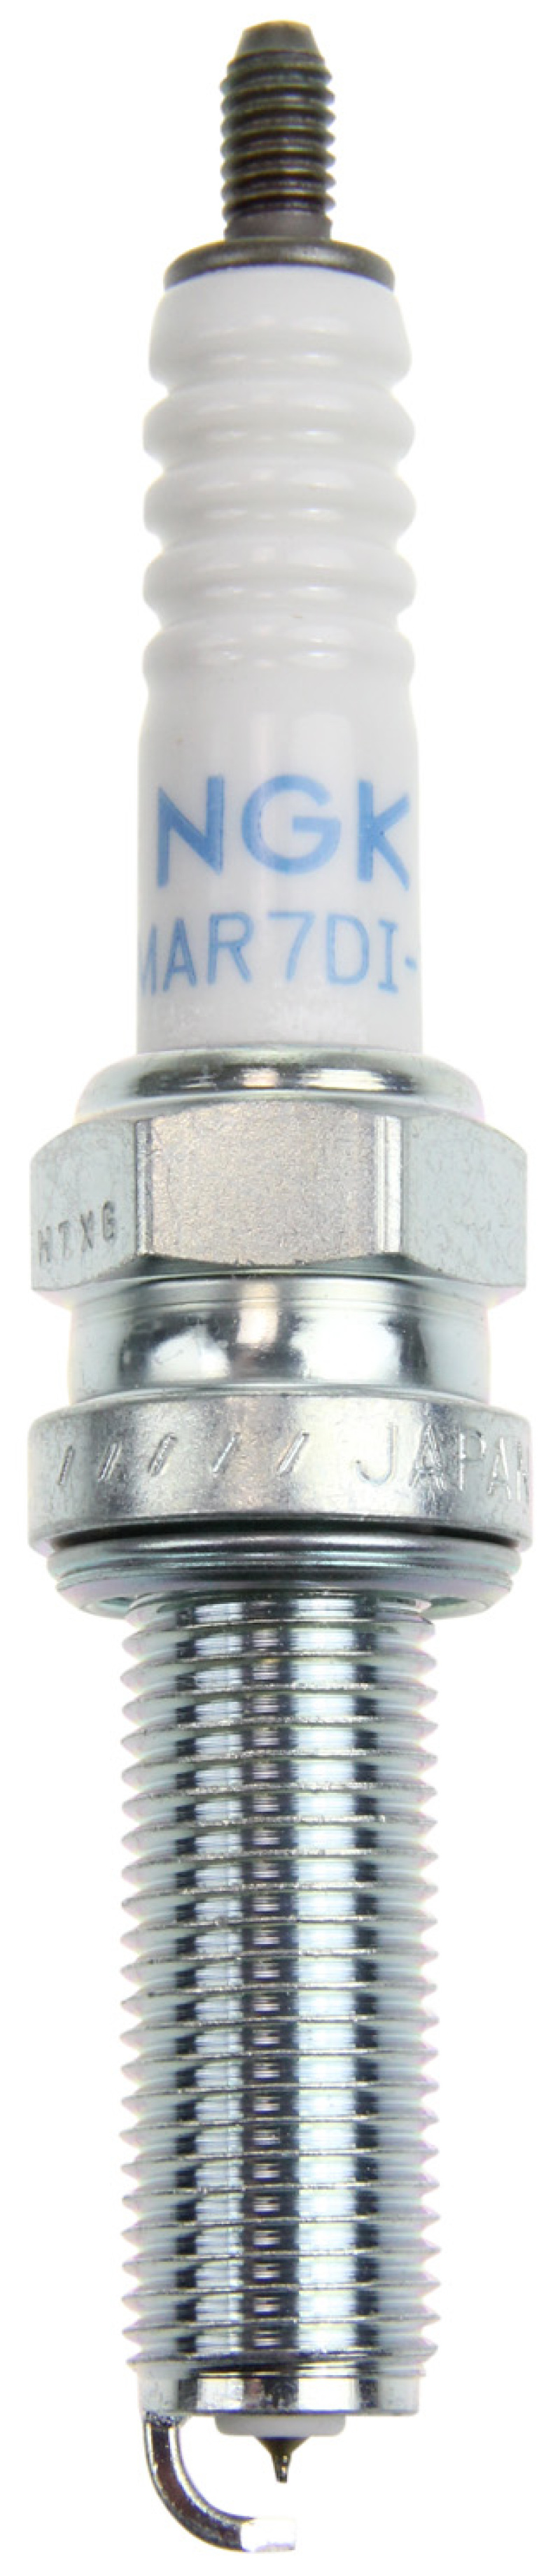 NGK Laser Iridium Spark Plug Box of 4 (LMAR7DI-10) - 96956